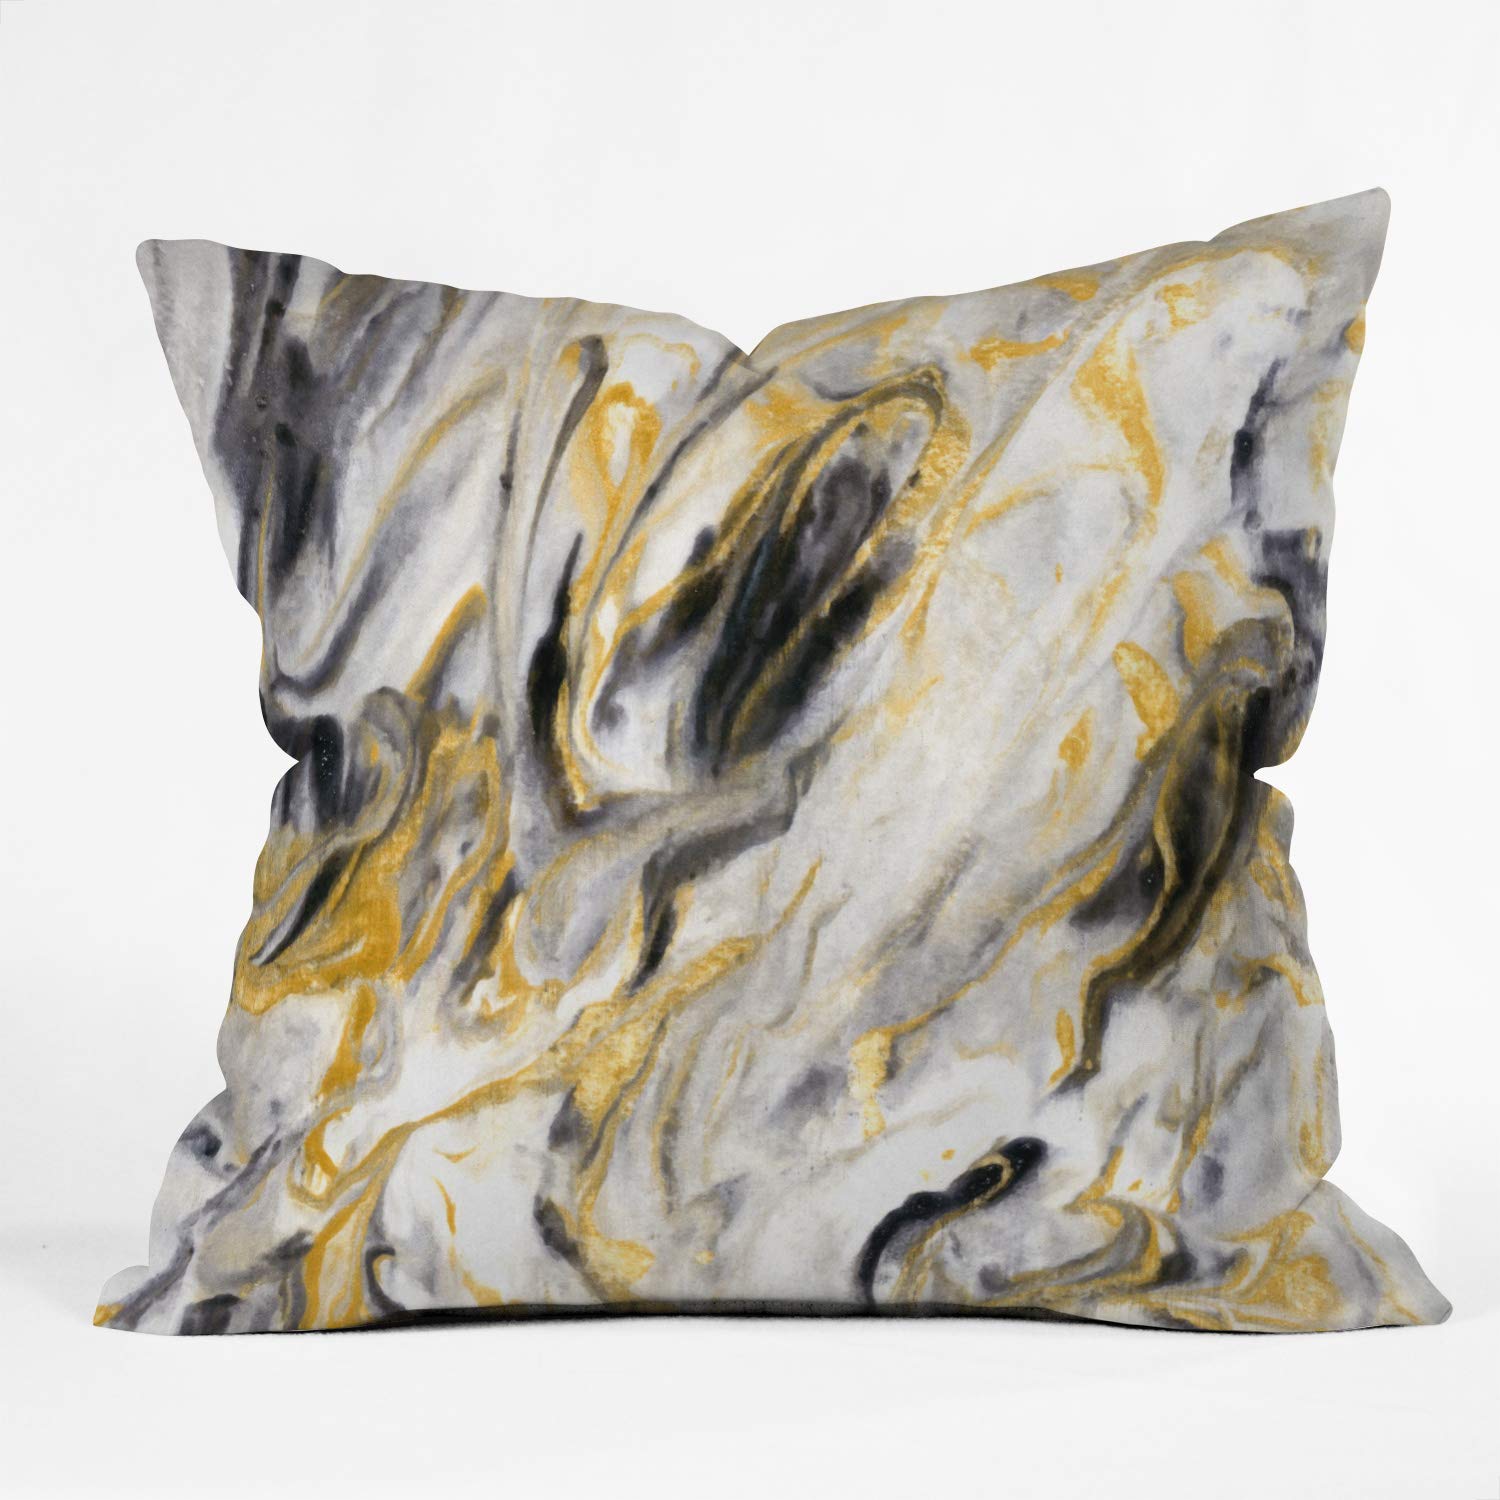 Deny Designs Jacqueline Maldonado Black and Gold Marble Indoor Throw Pillow, 20" x 20"